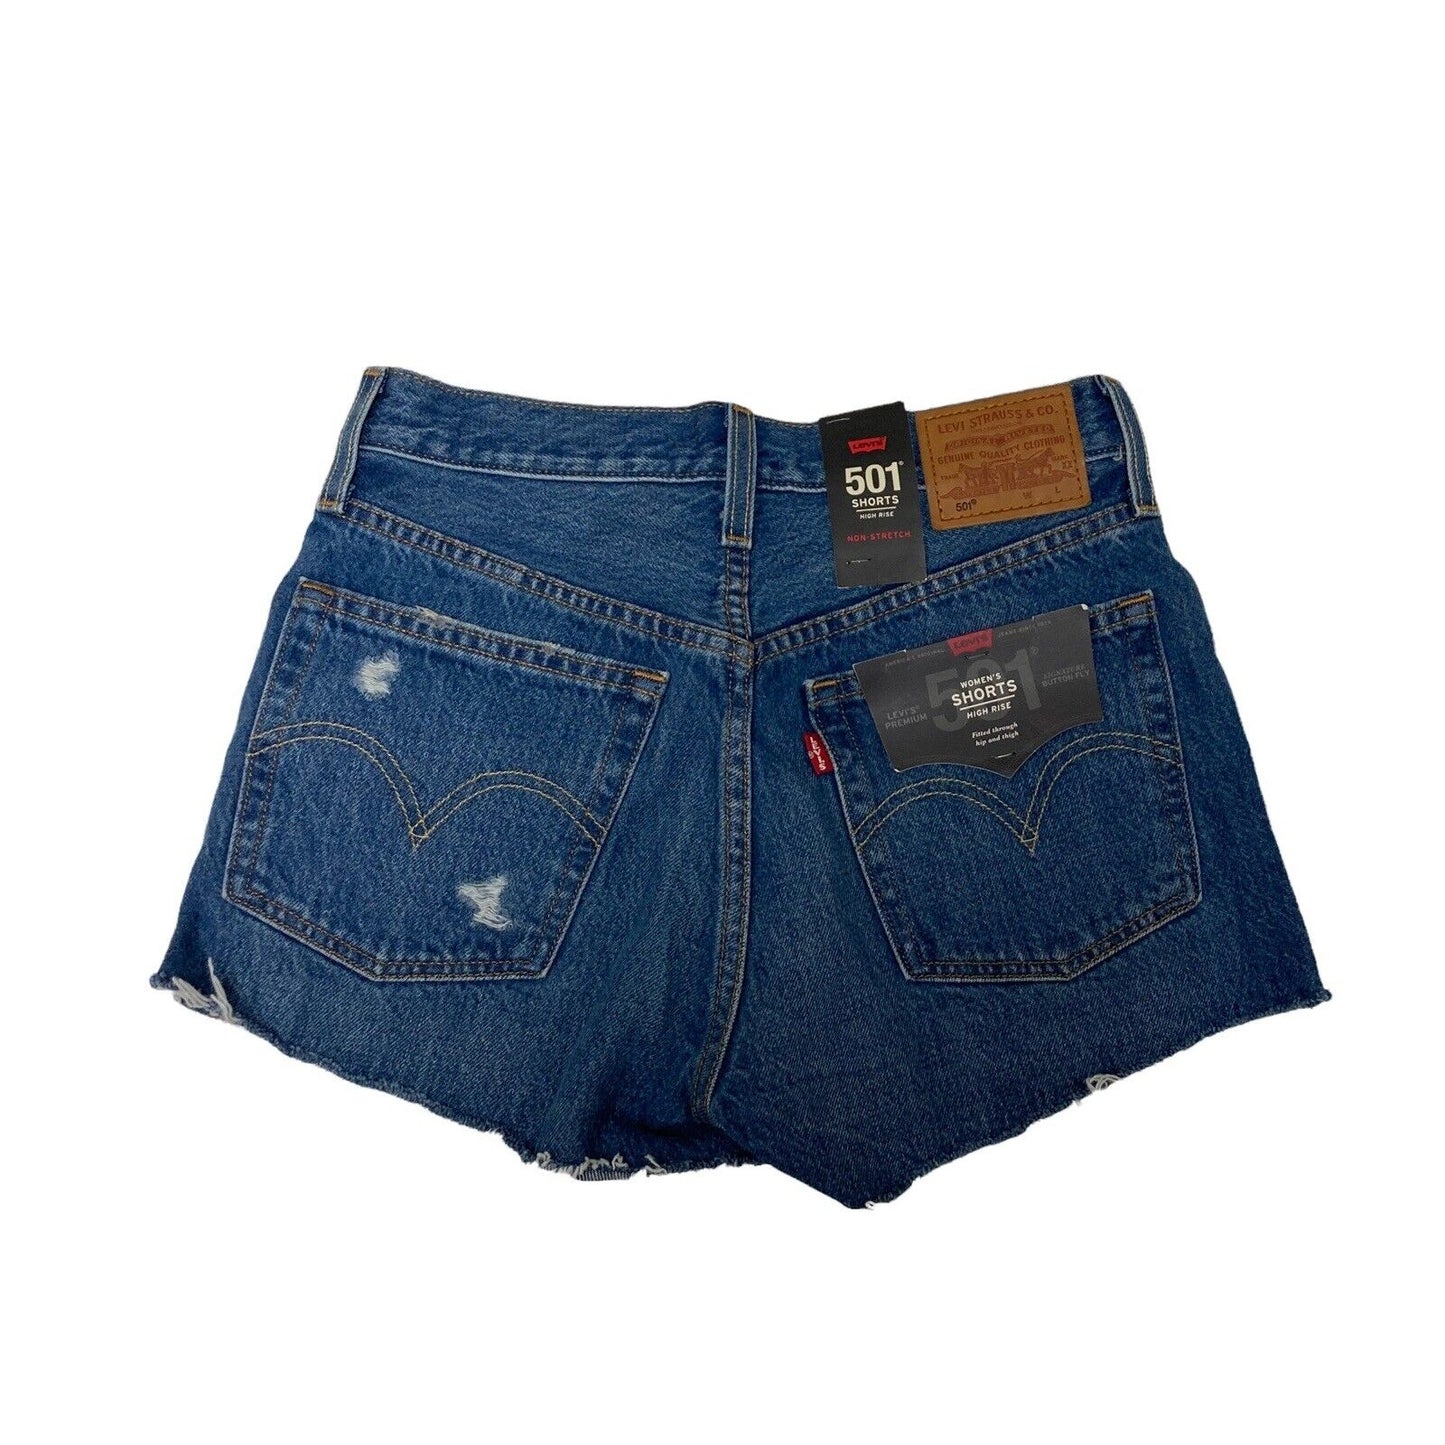 Levi’s Premium 501 High Rise Distressed Dark Wash Shorts Size 28